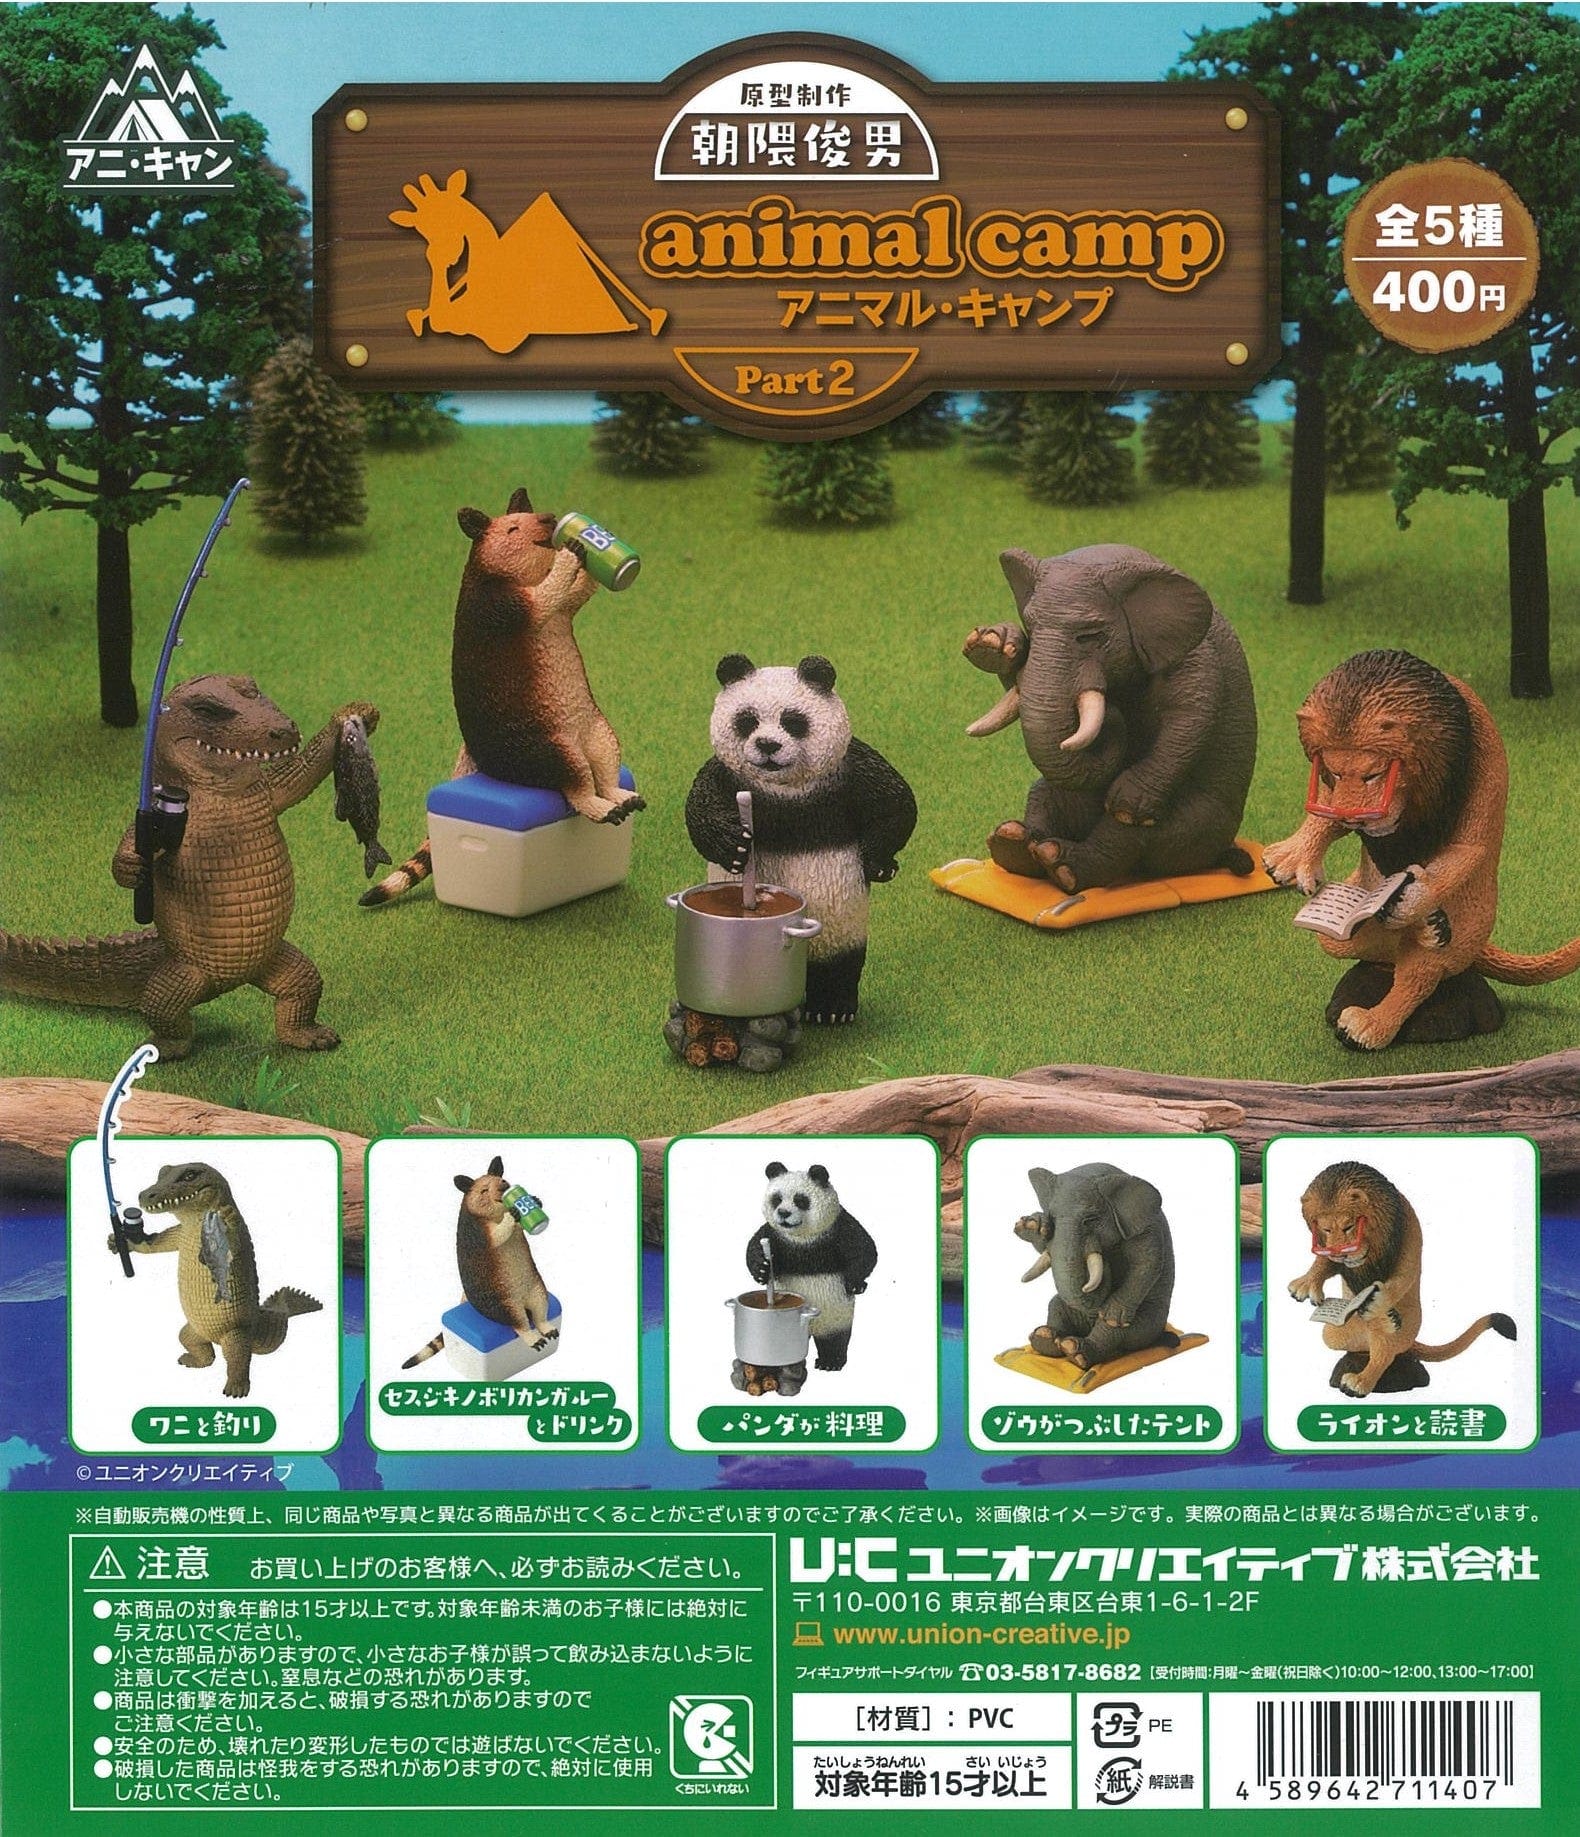 Union Creative CP1822 Toshio Asakuma no Animal Camp Ani Camp Part 2 Capsule